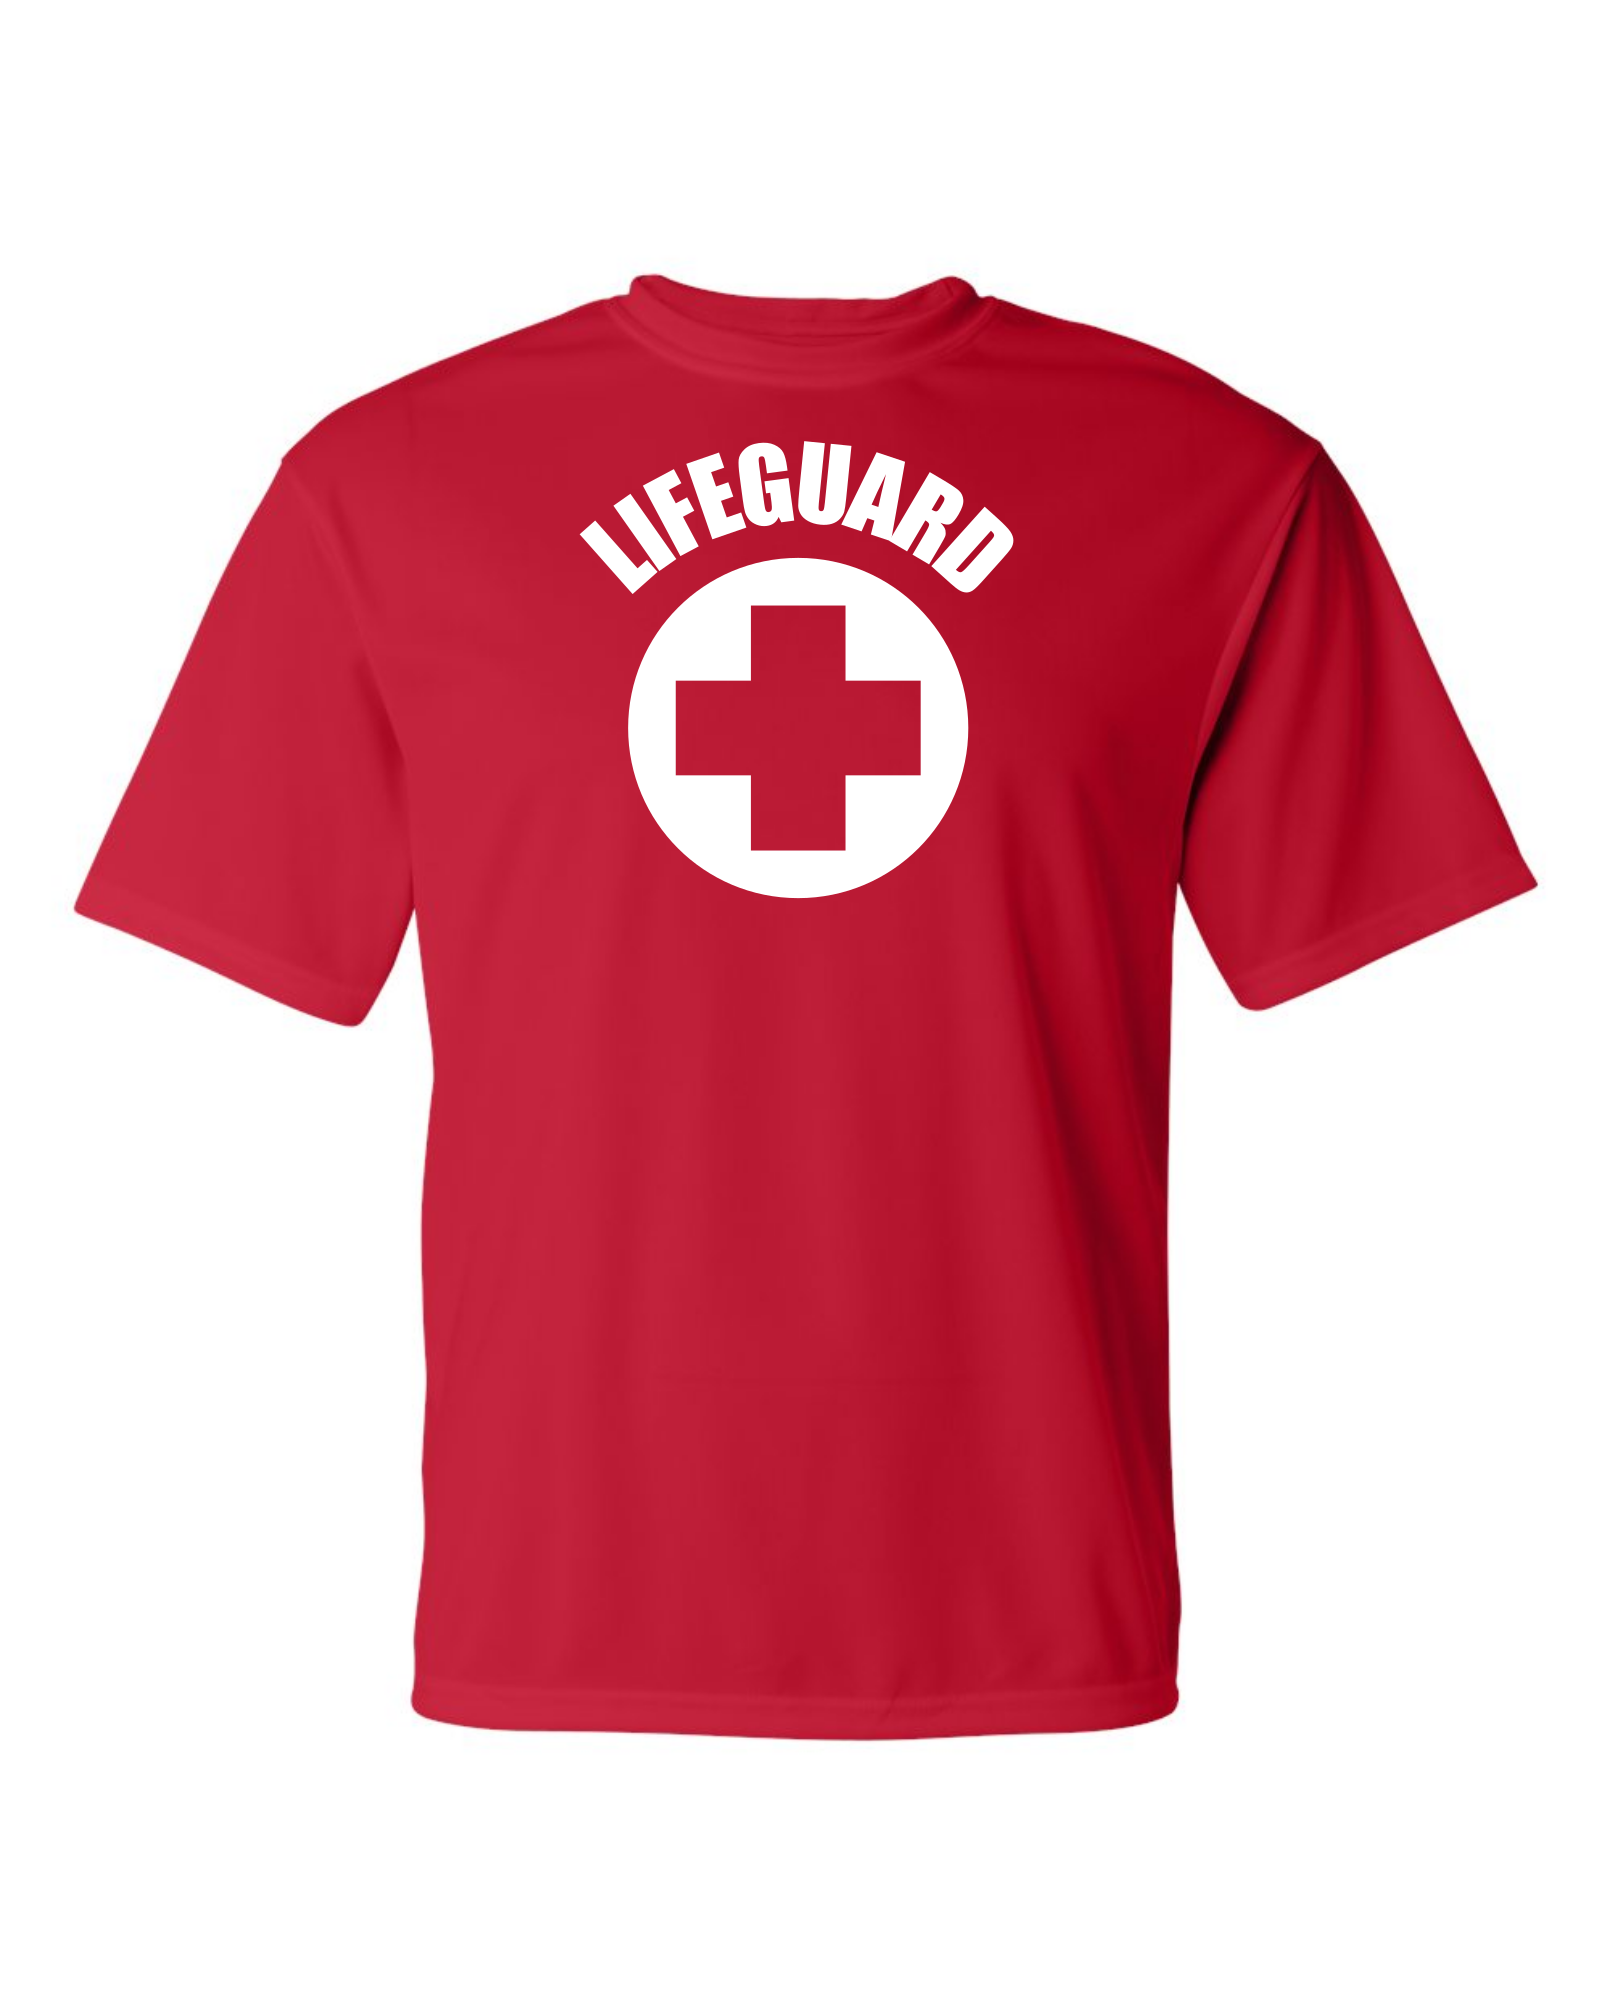 Exert Larry Belmont Teenageår Lifeguard – T-Shirt (Round Logo) - Unique Country Store & More